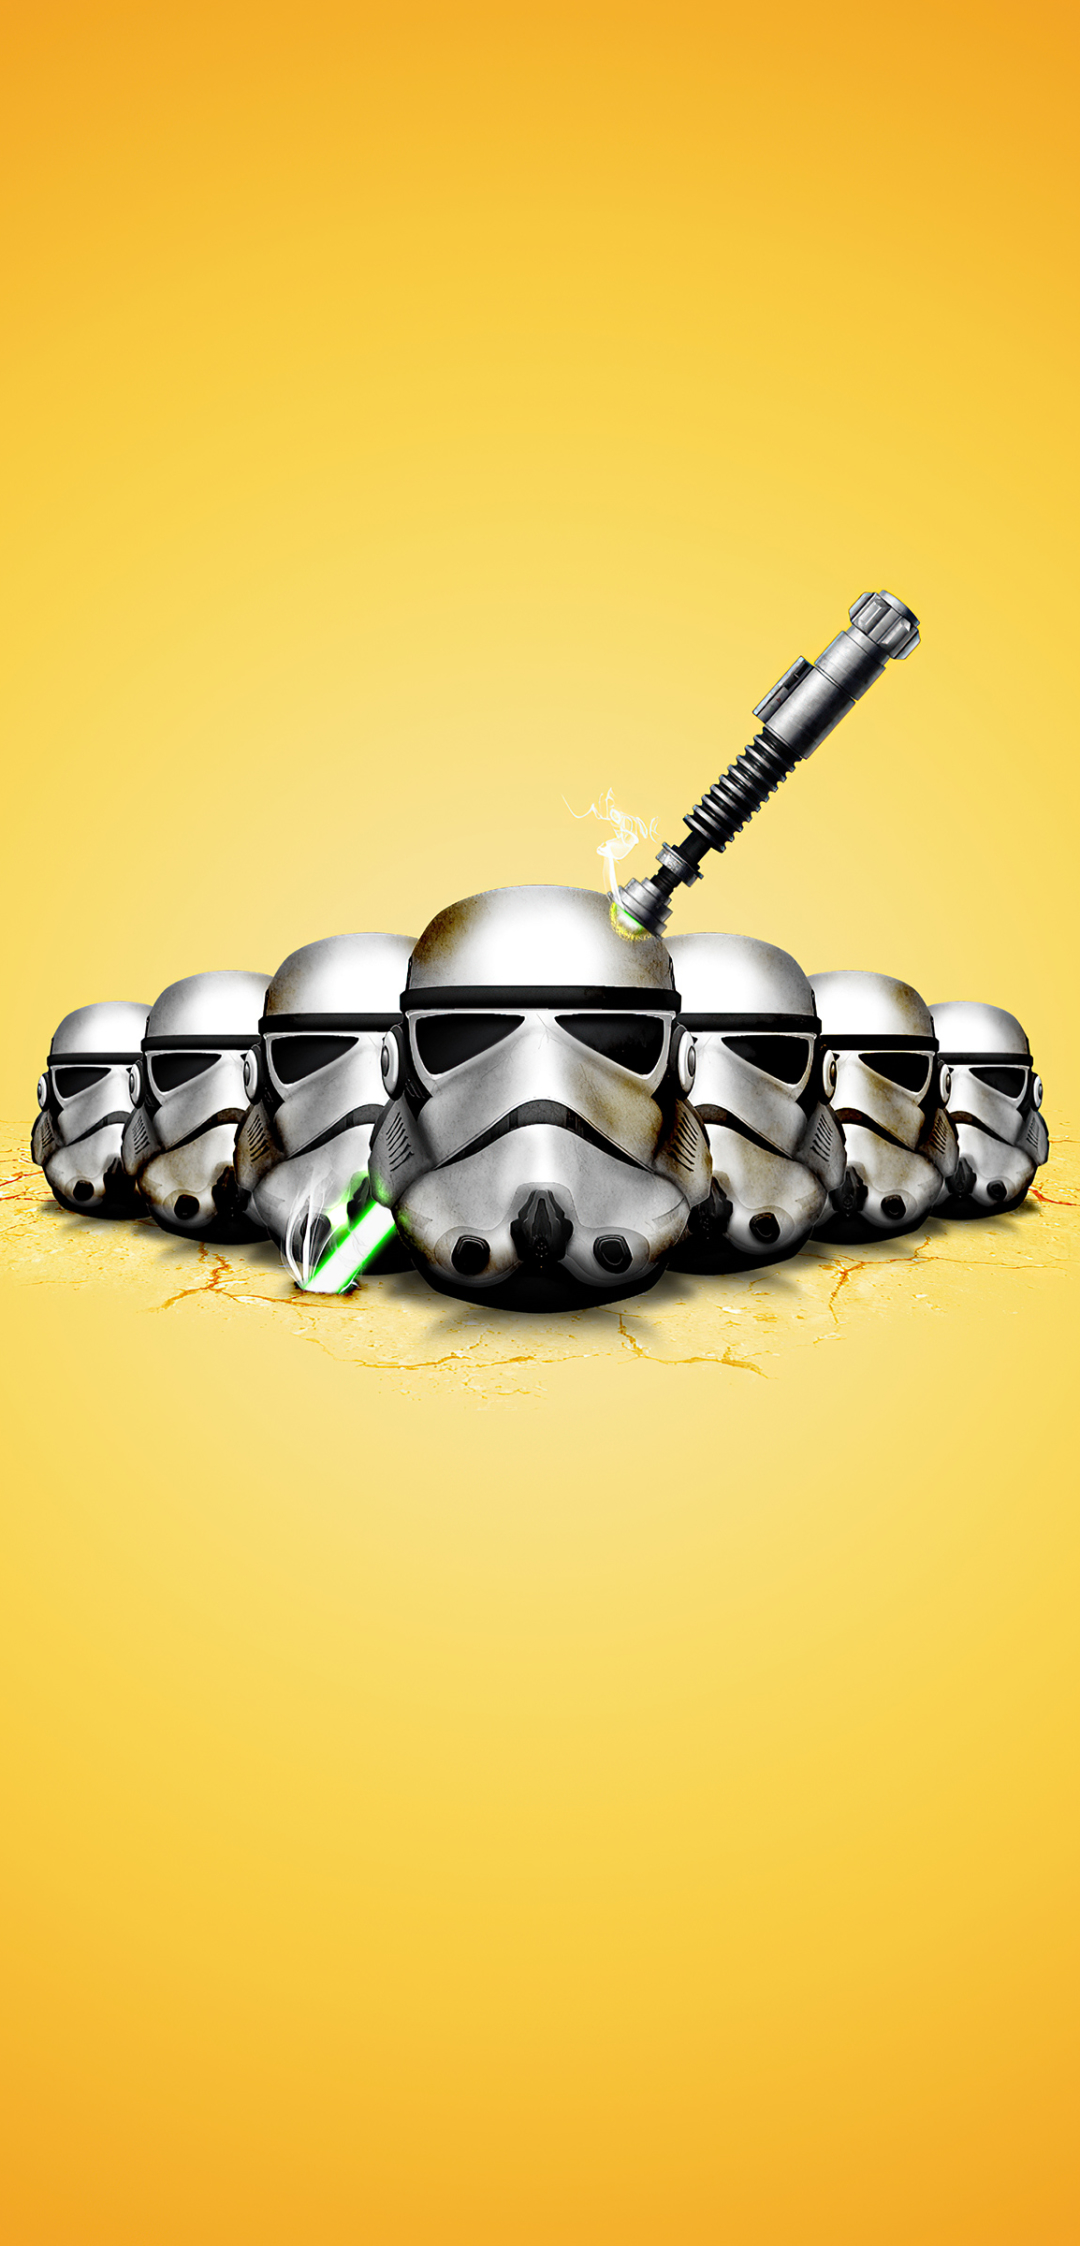 Download mobile wallpaper Star Wars, Sci Fi, Stormtrooper for free.